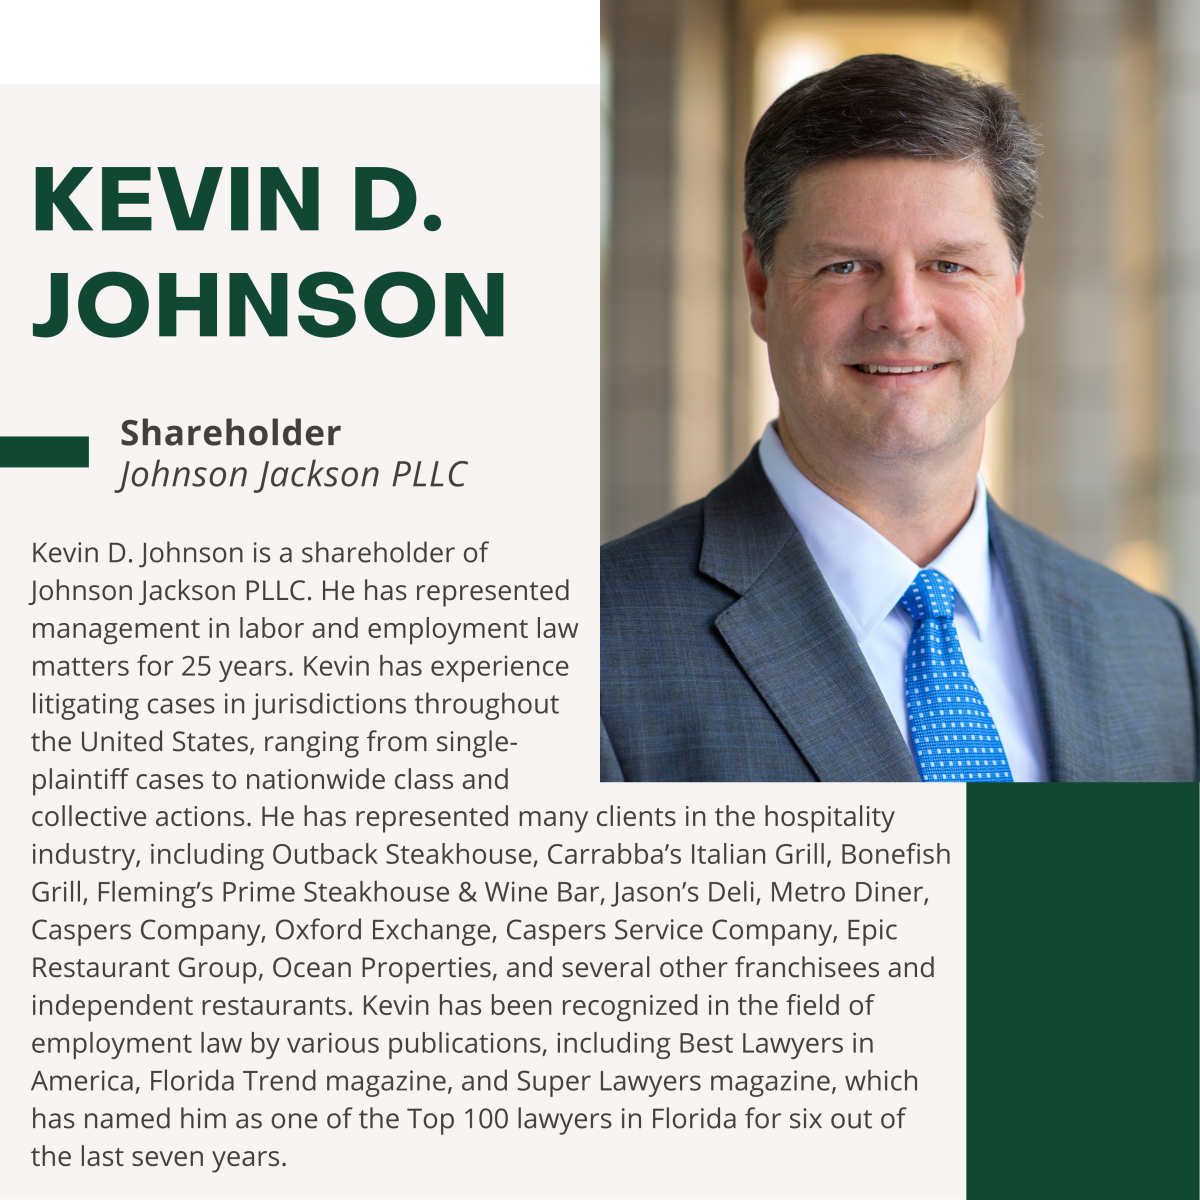 Kevin D. Johnson